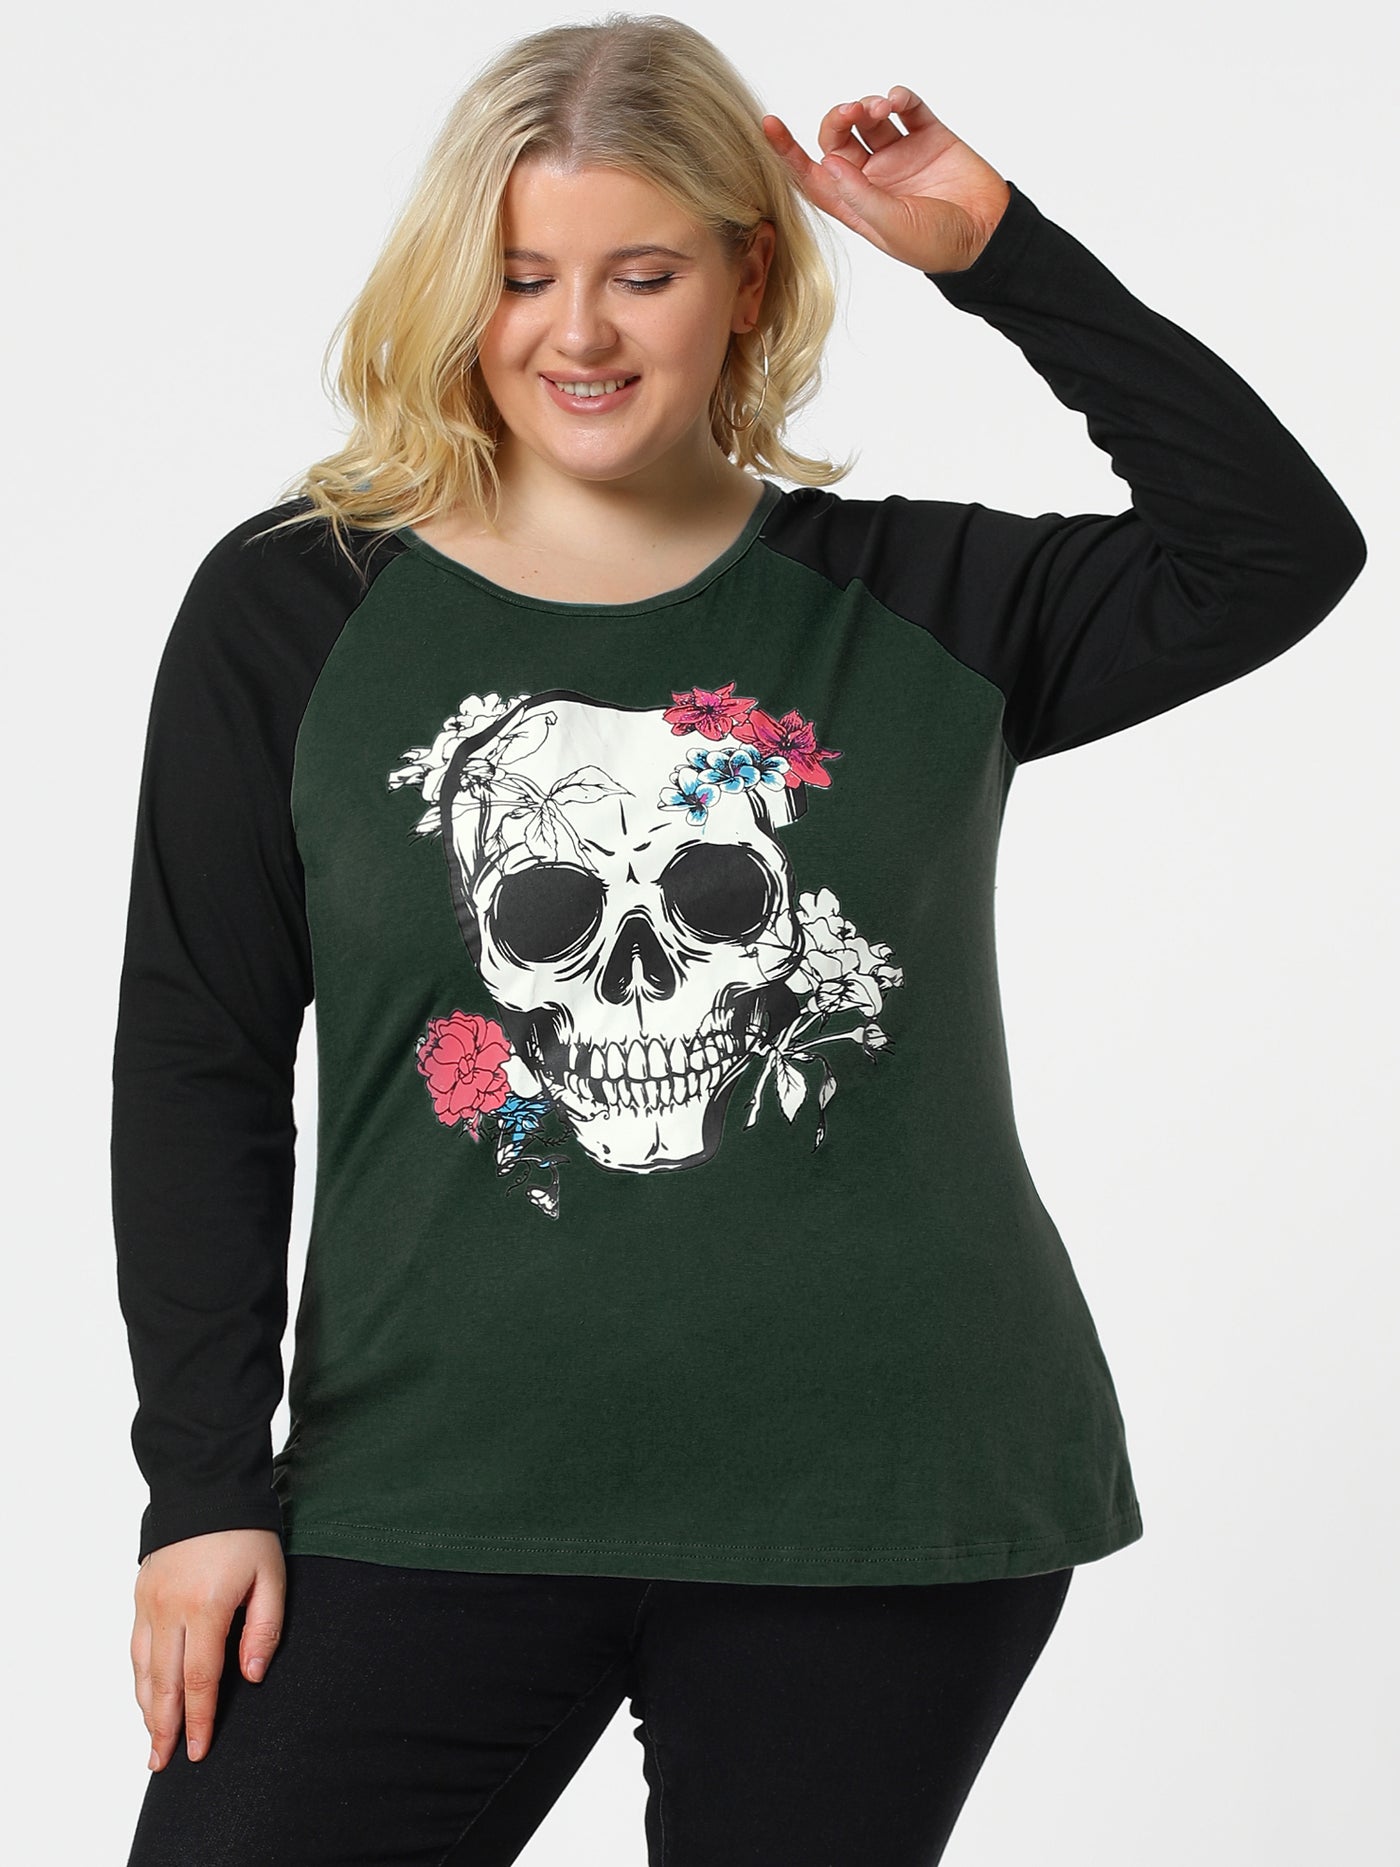 Bublédon Plus Size Tops Floral Skull Colorblock Raglan Long Sleeve Shirt